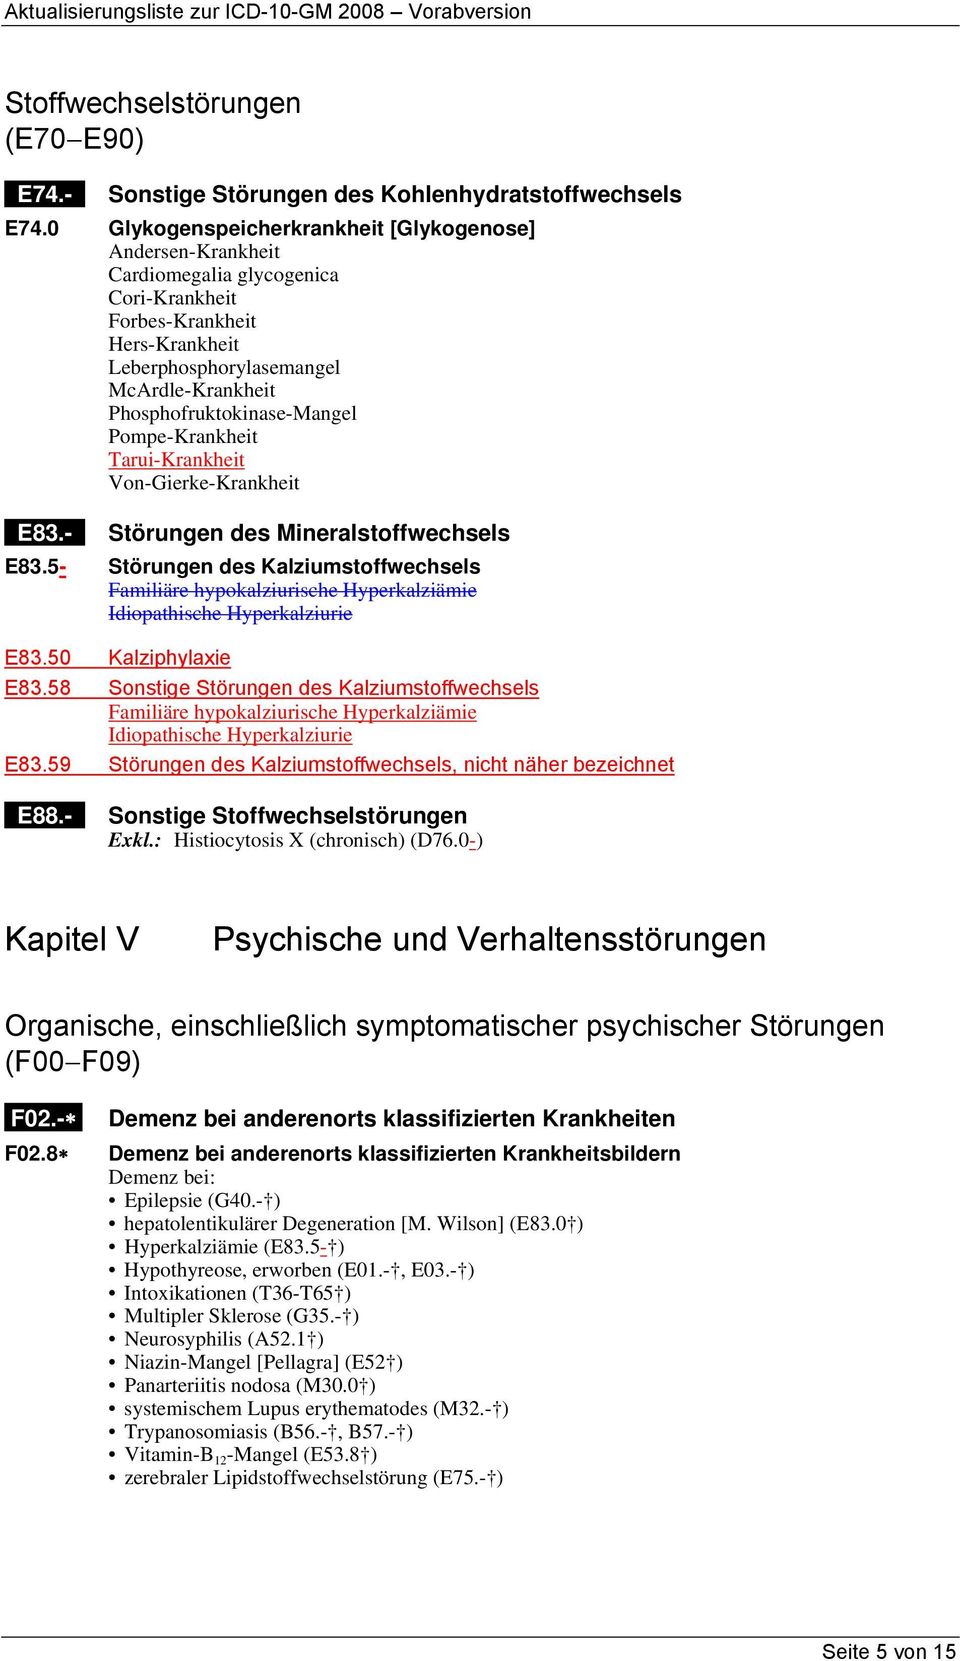 Phosphofruktokinase-Mangel Pompe-Krankheit Tarui-Krankheit Von-Gierke-Krankheit E83.- E83.